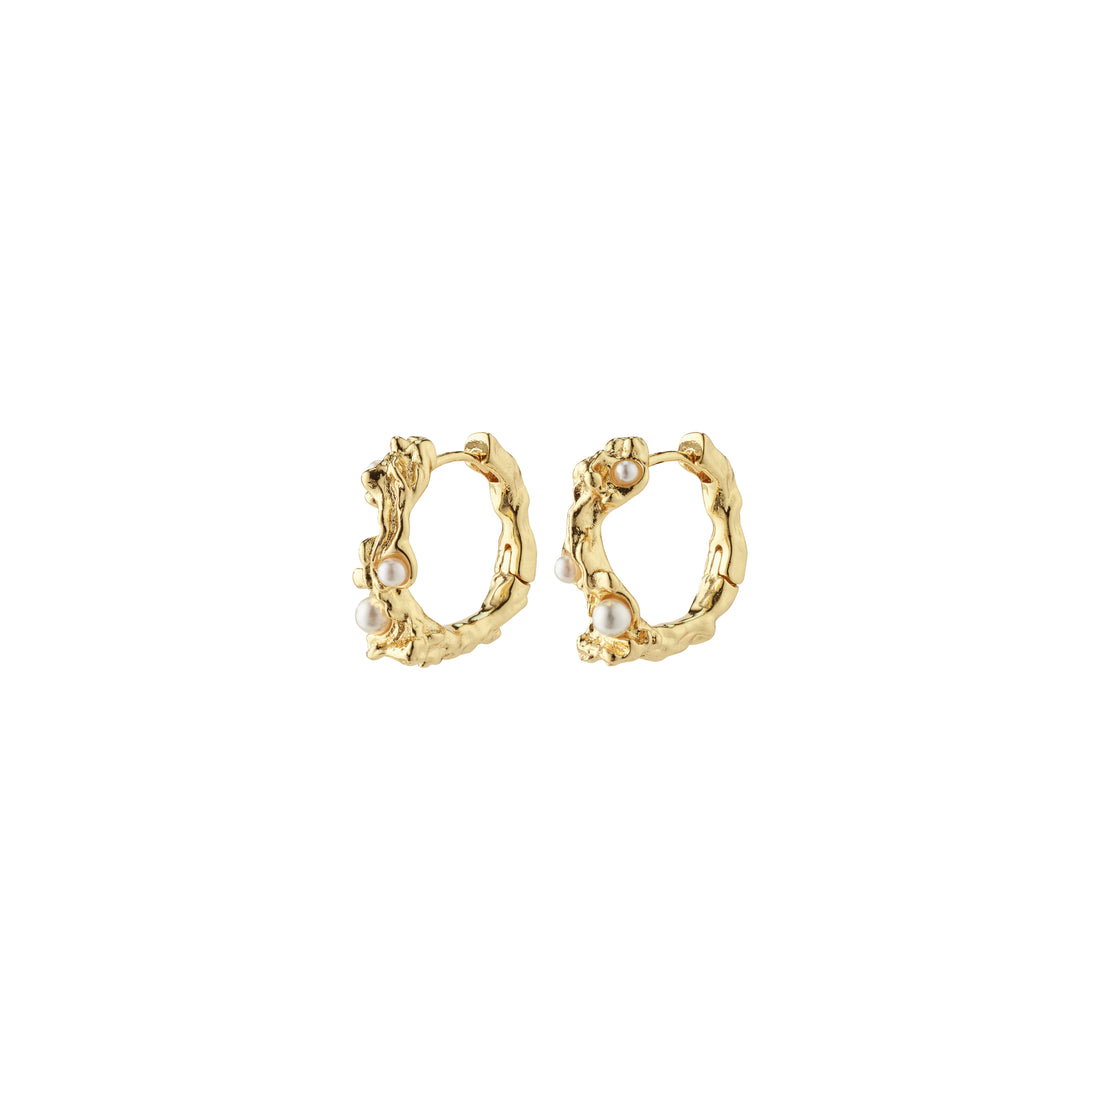 RAELYNN recycled earrings- PILGRIM